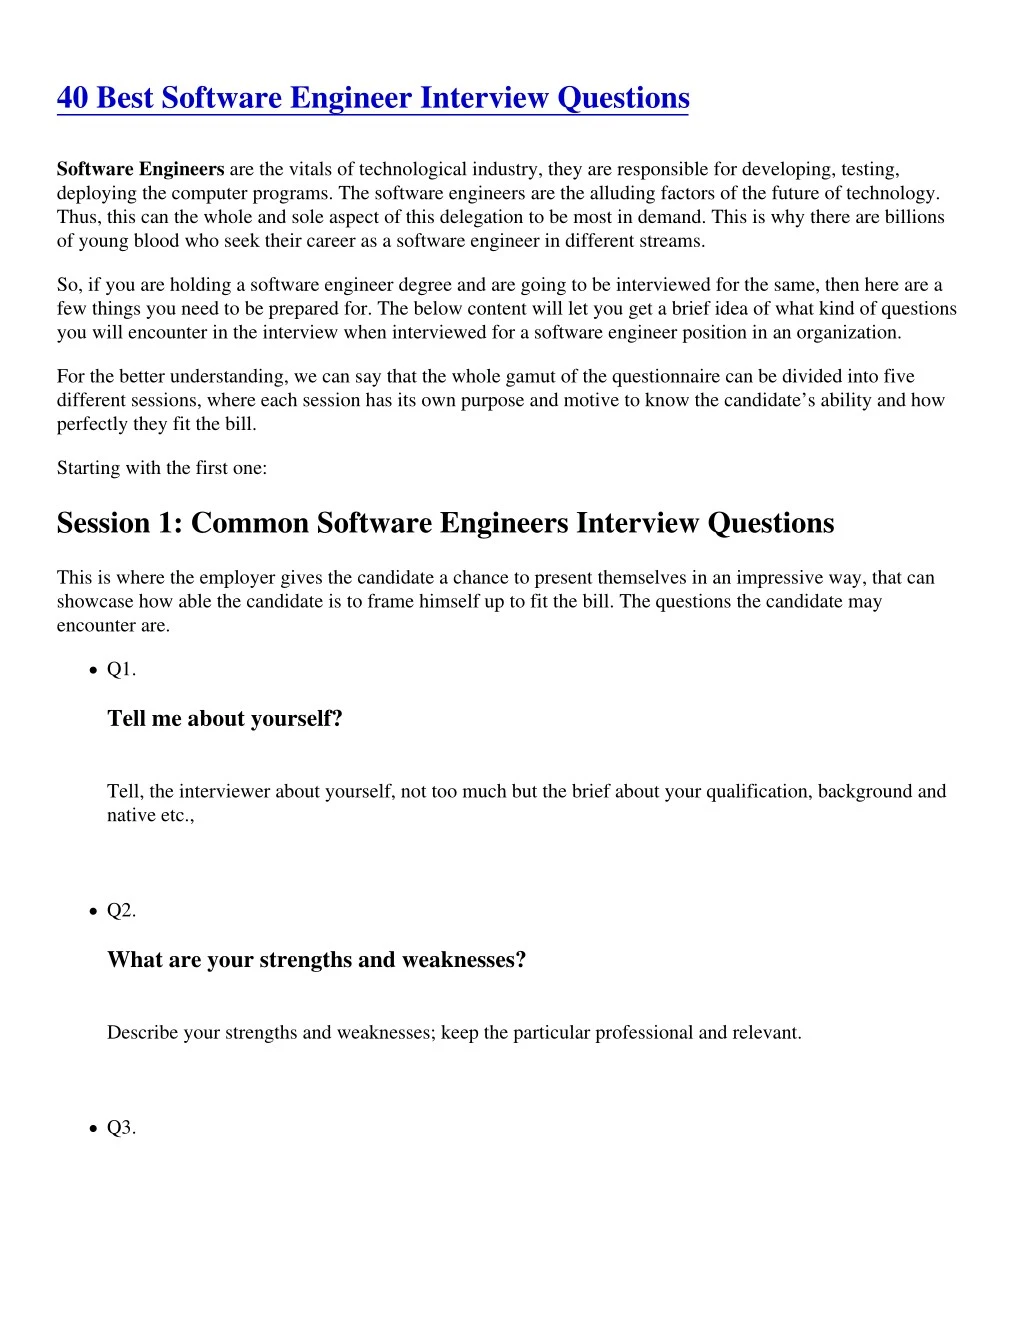 40 best software engineer interview questions